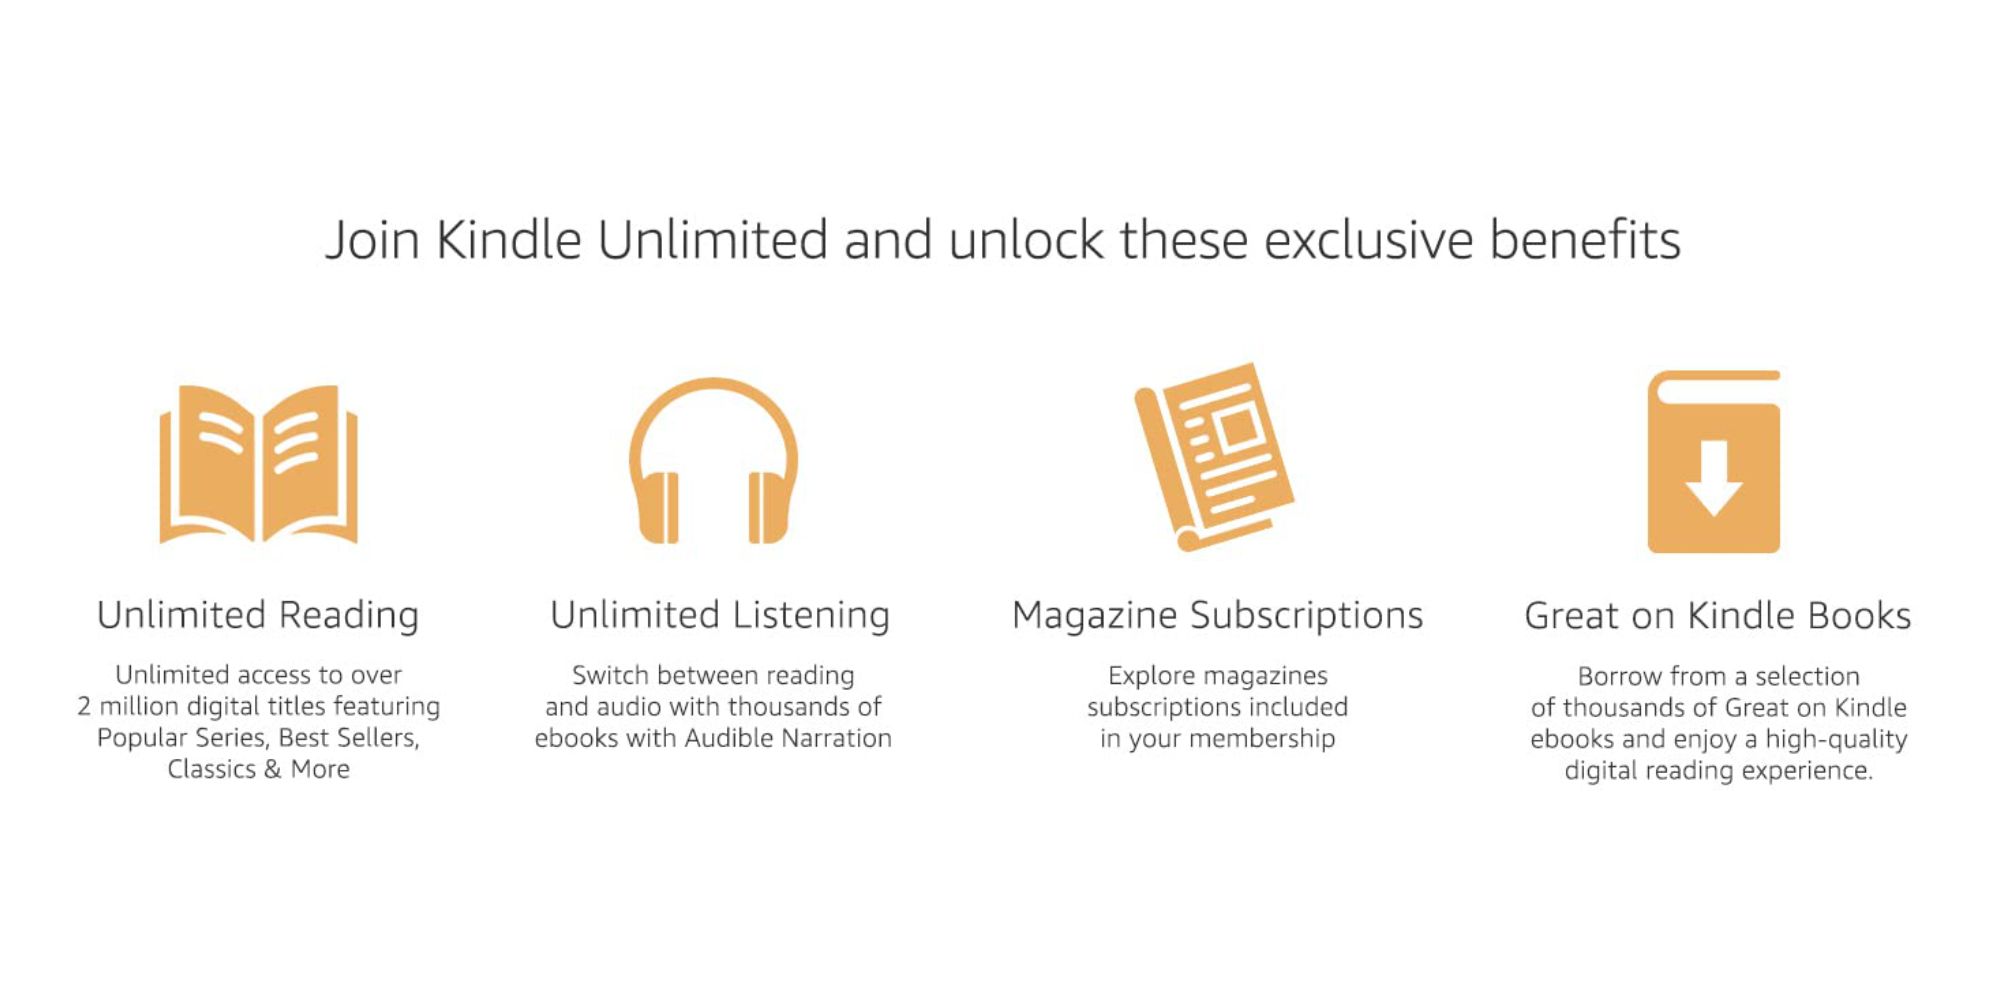 audible narration kindle mac app